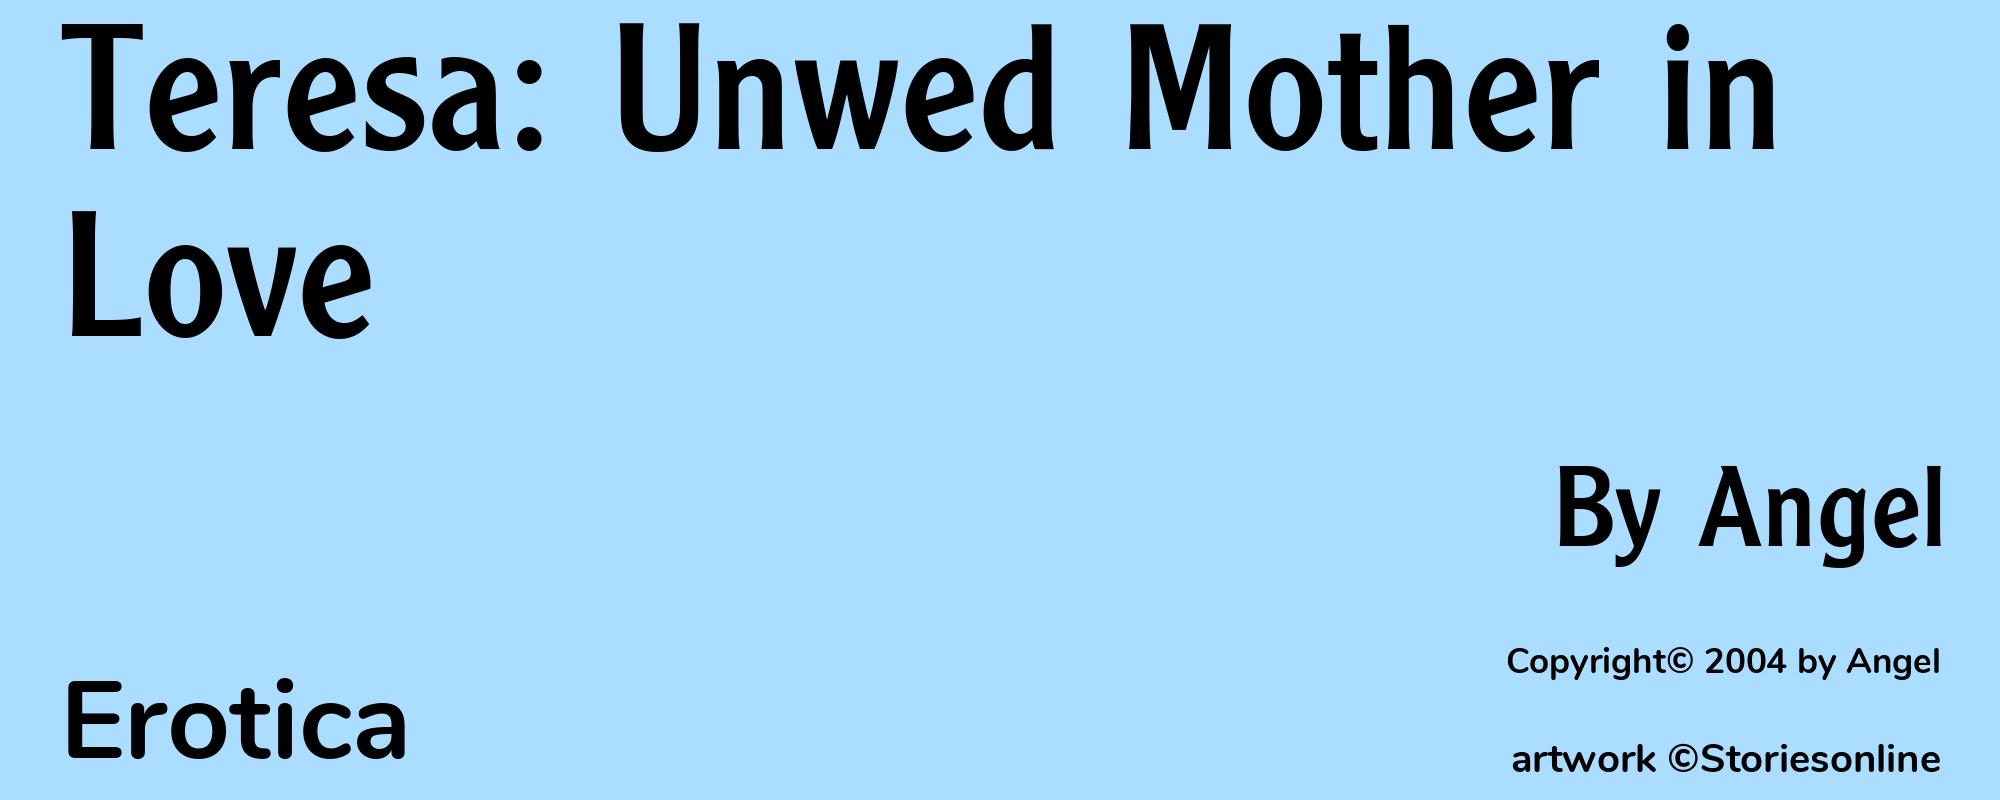 Teresa: Unwed Mother in Love - Cover